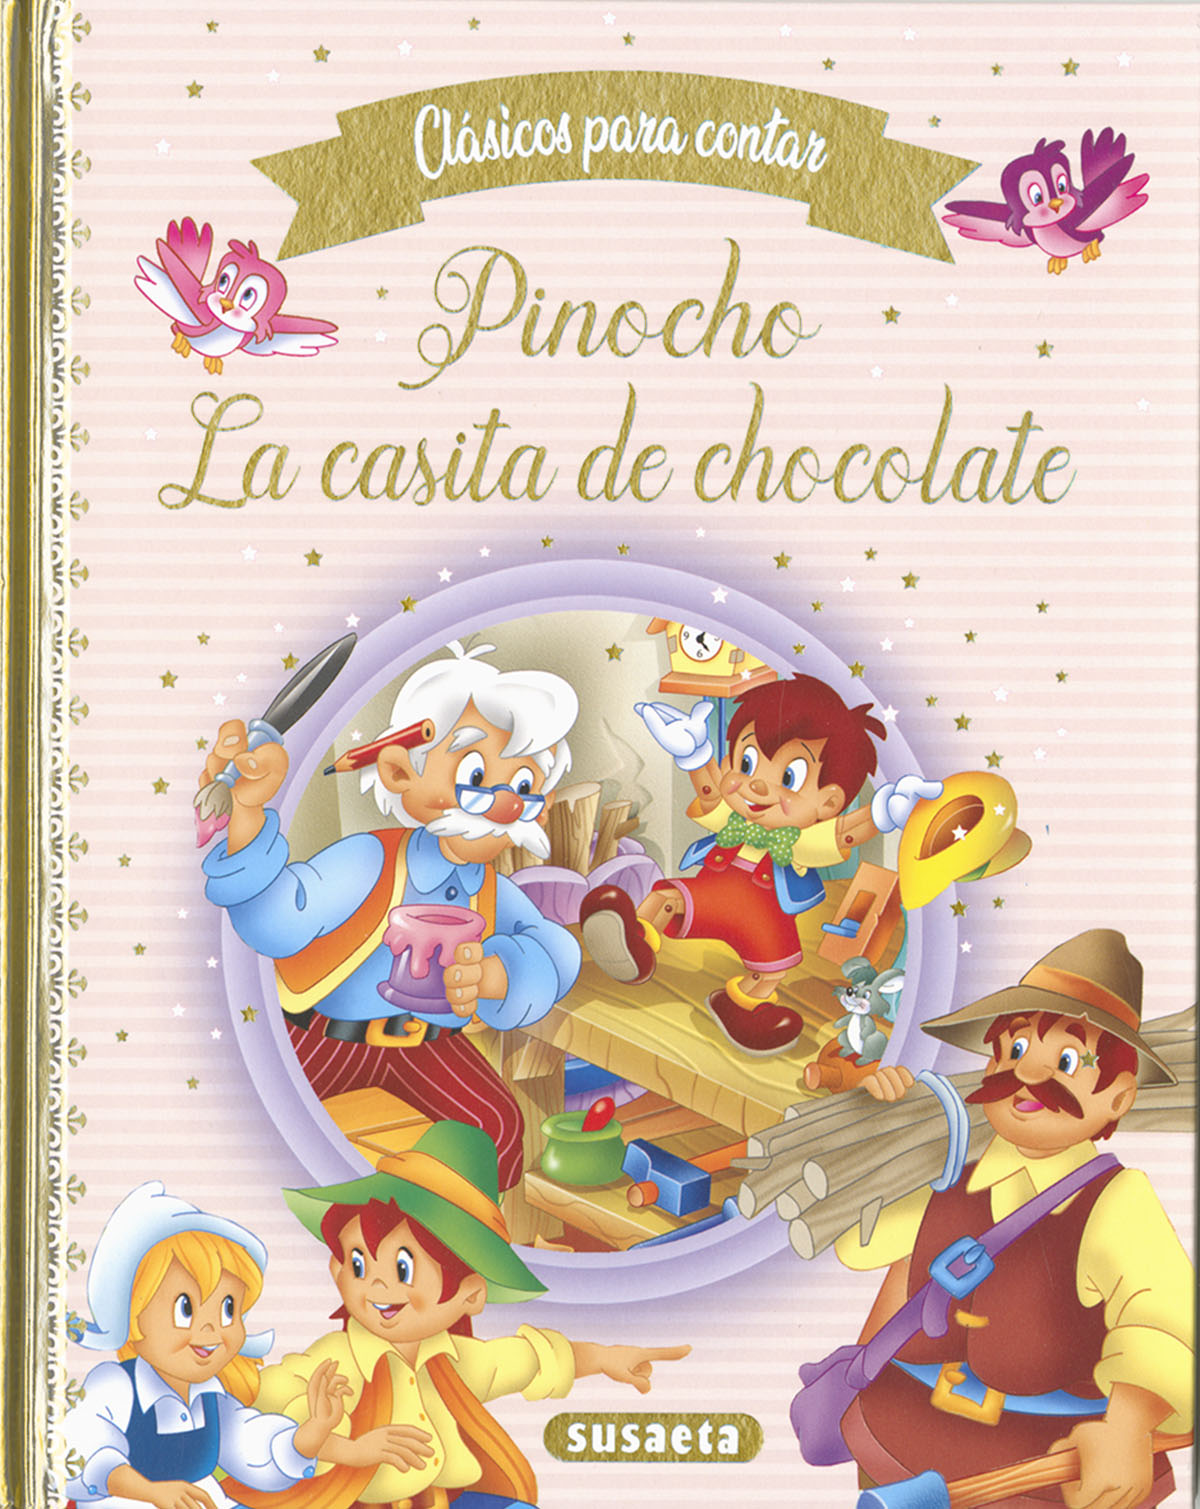 Pinocho - La casita de chocolate